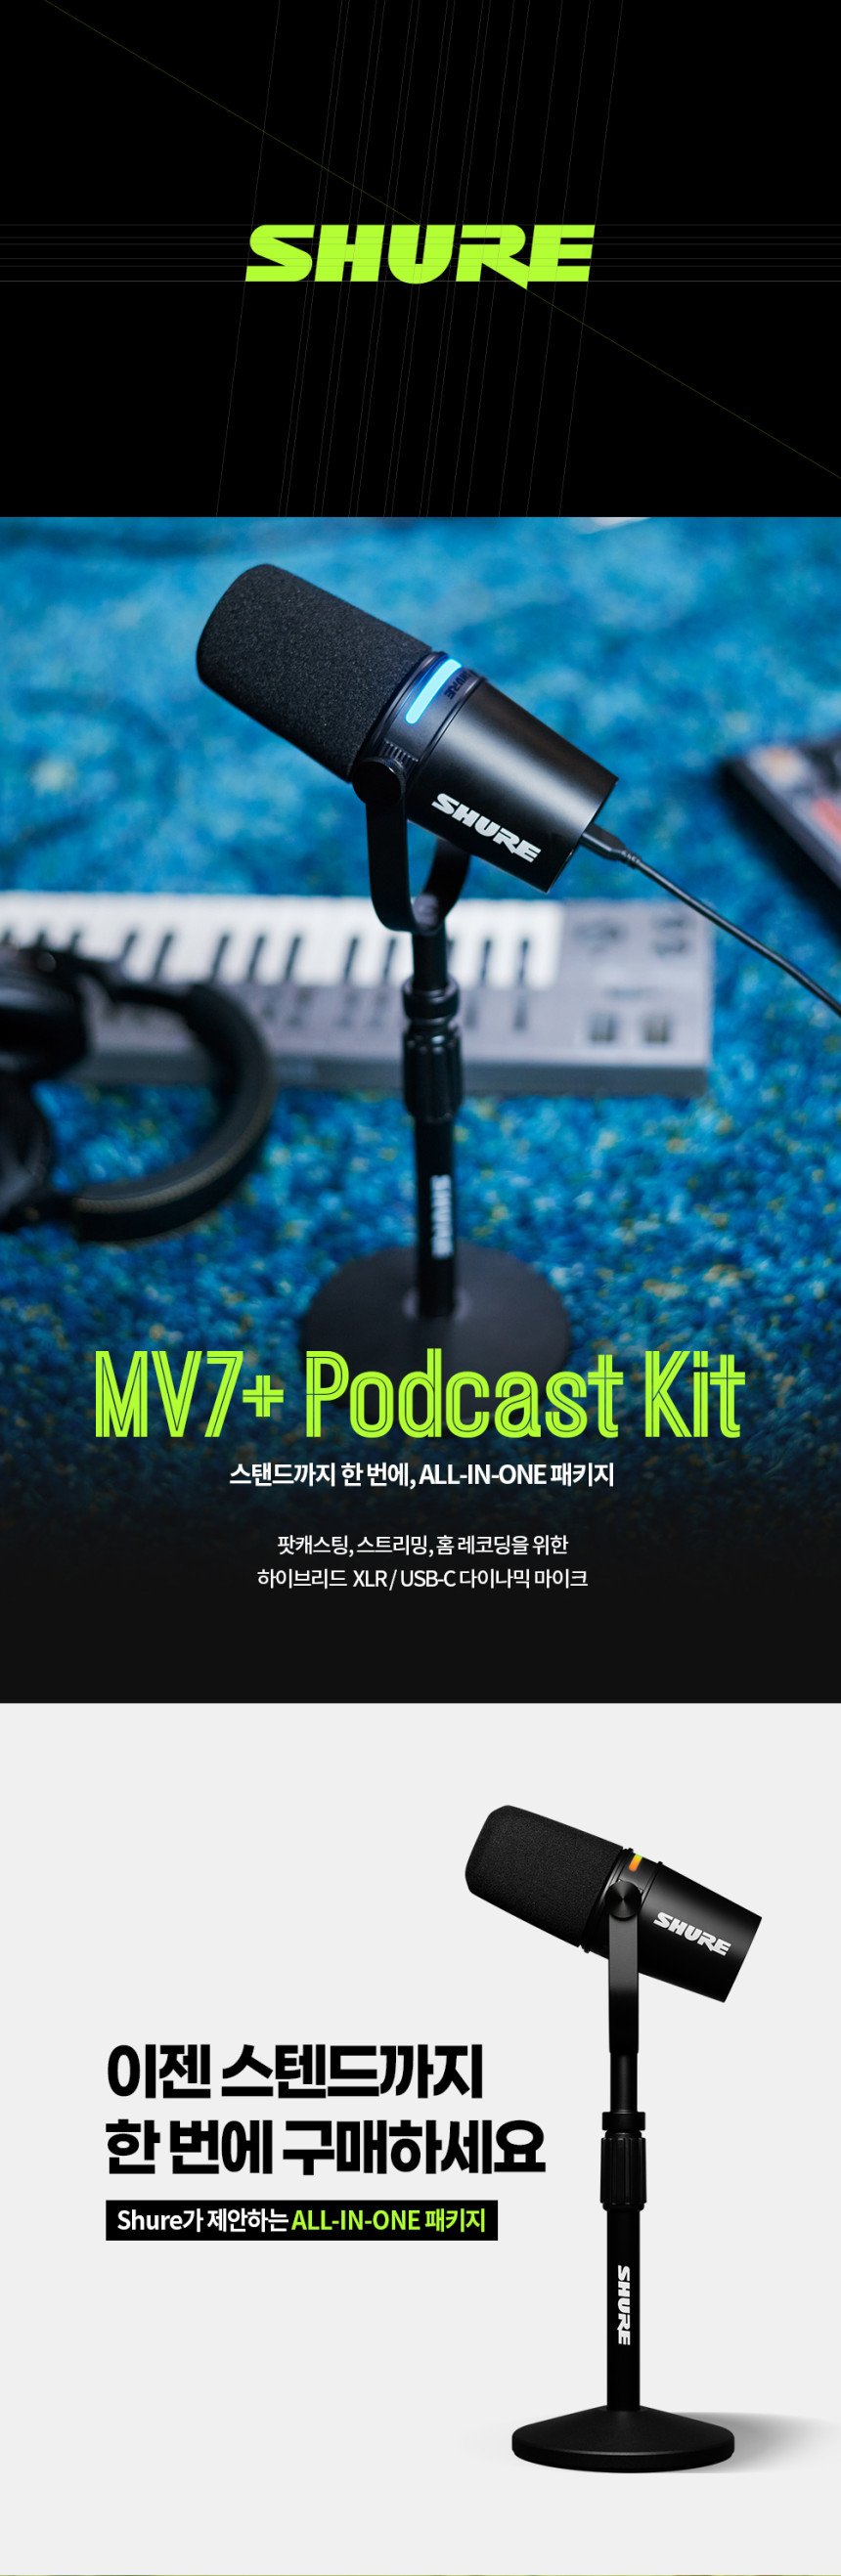 MV7+_PodcastKit-MAIN_2_150311.jpg